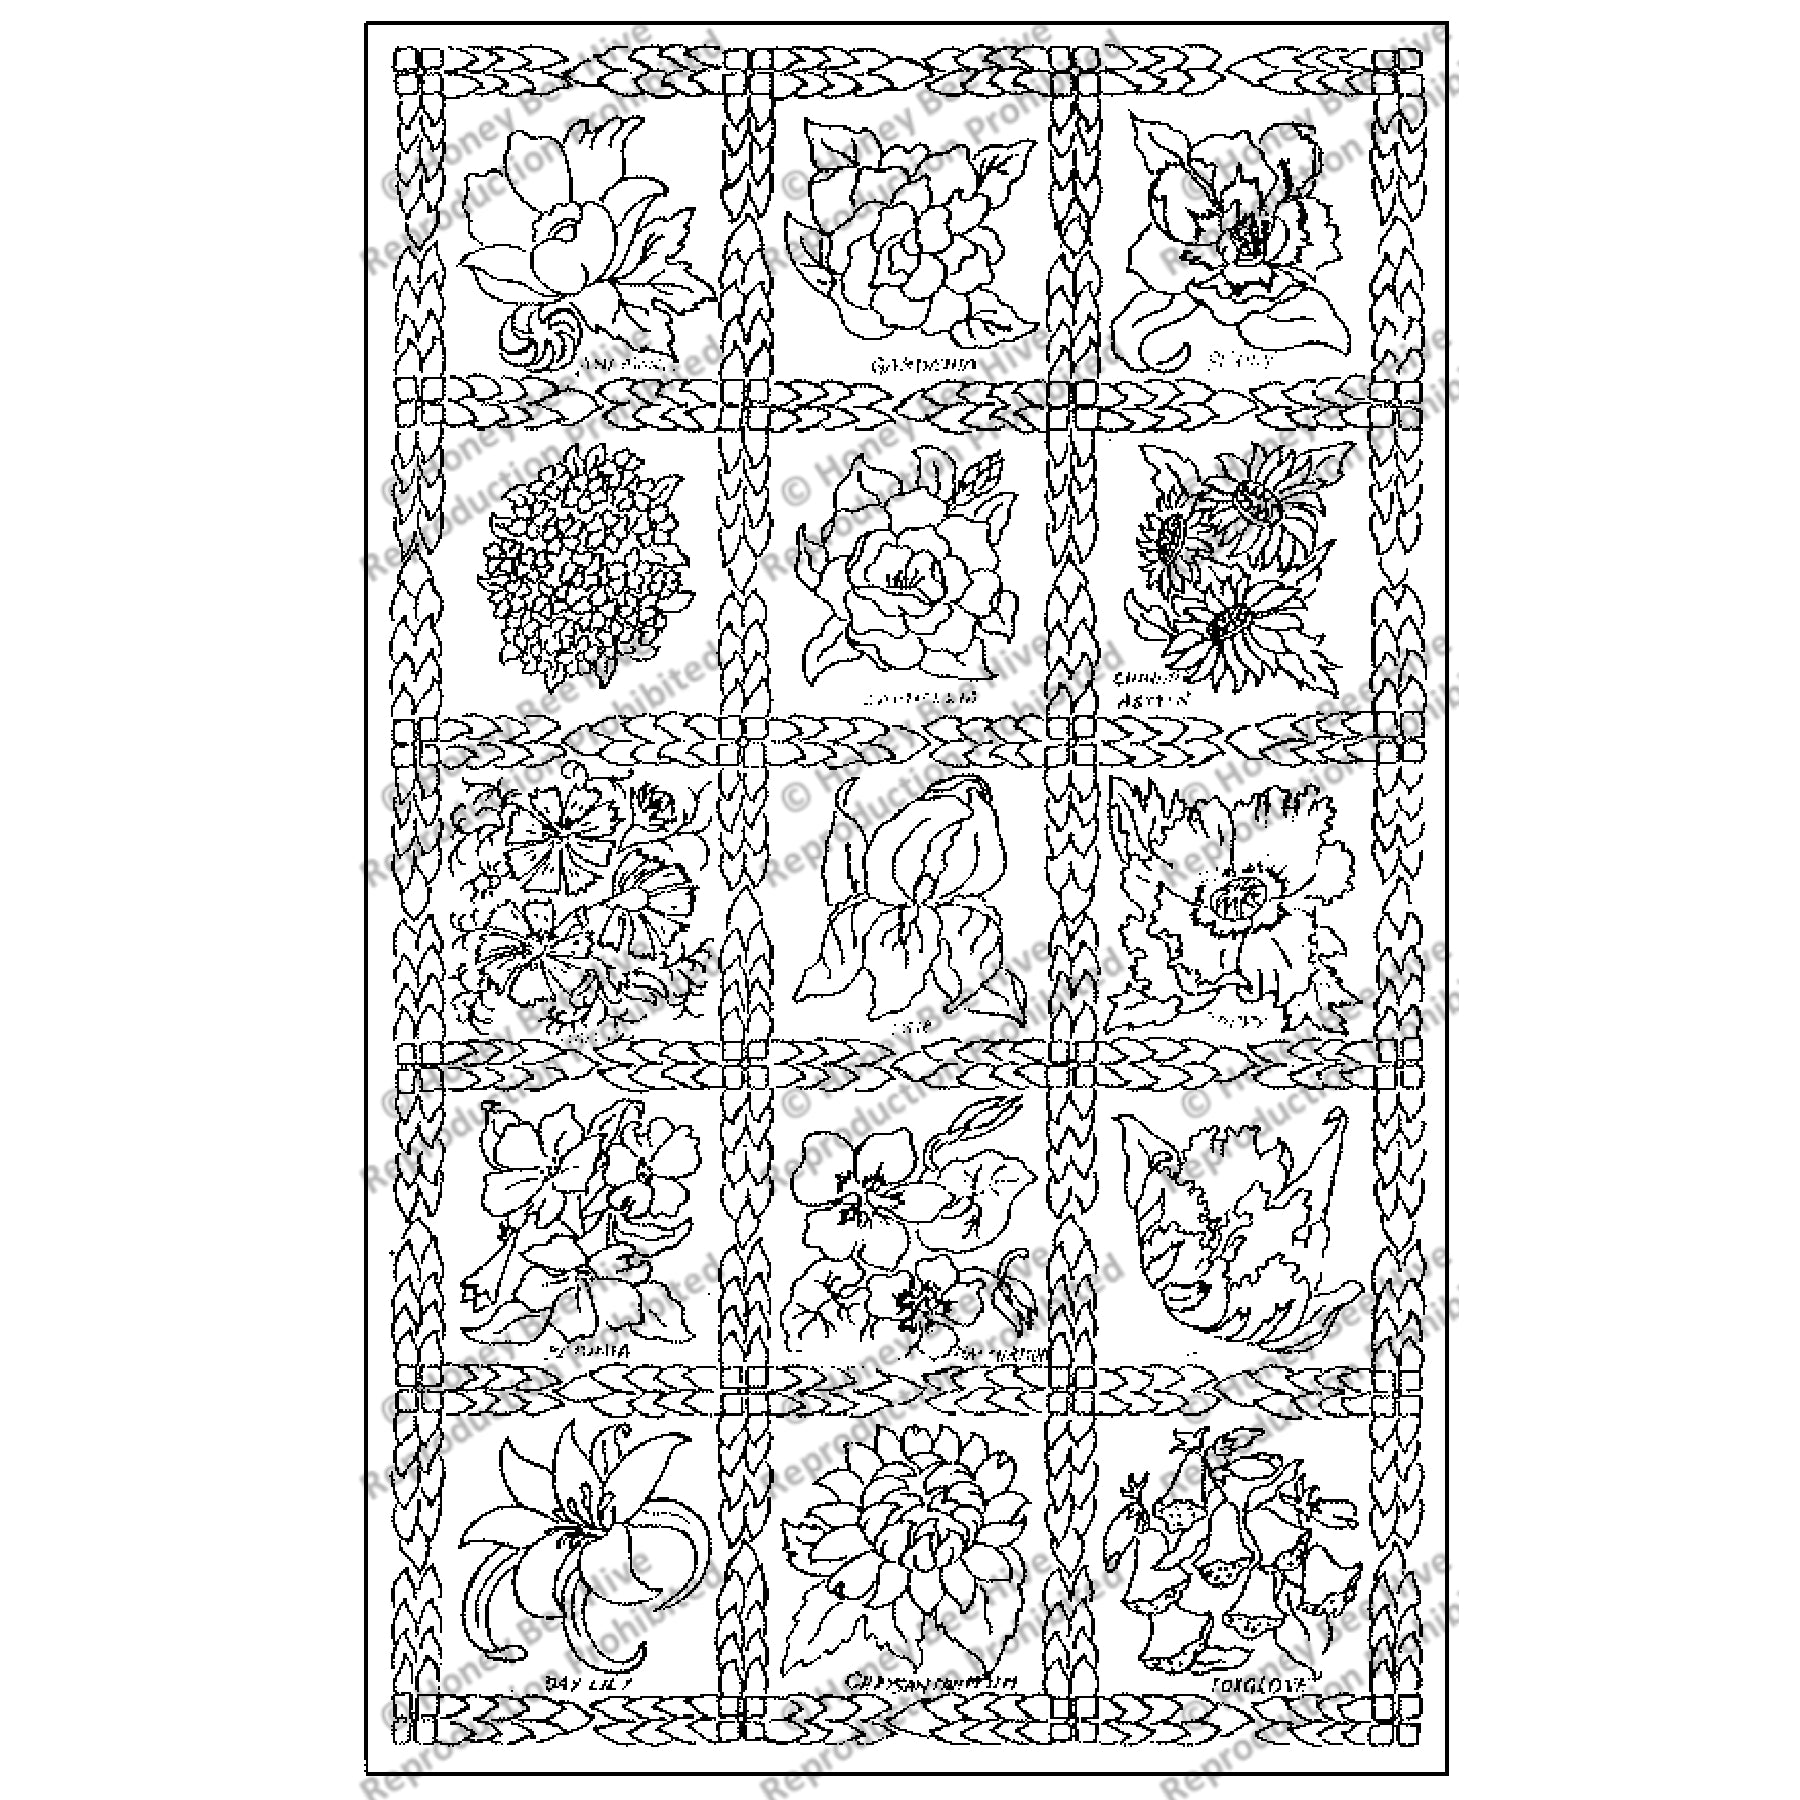 Mae-Time, rug hooking pattern